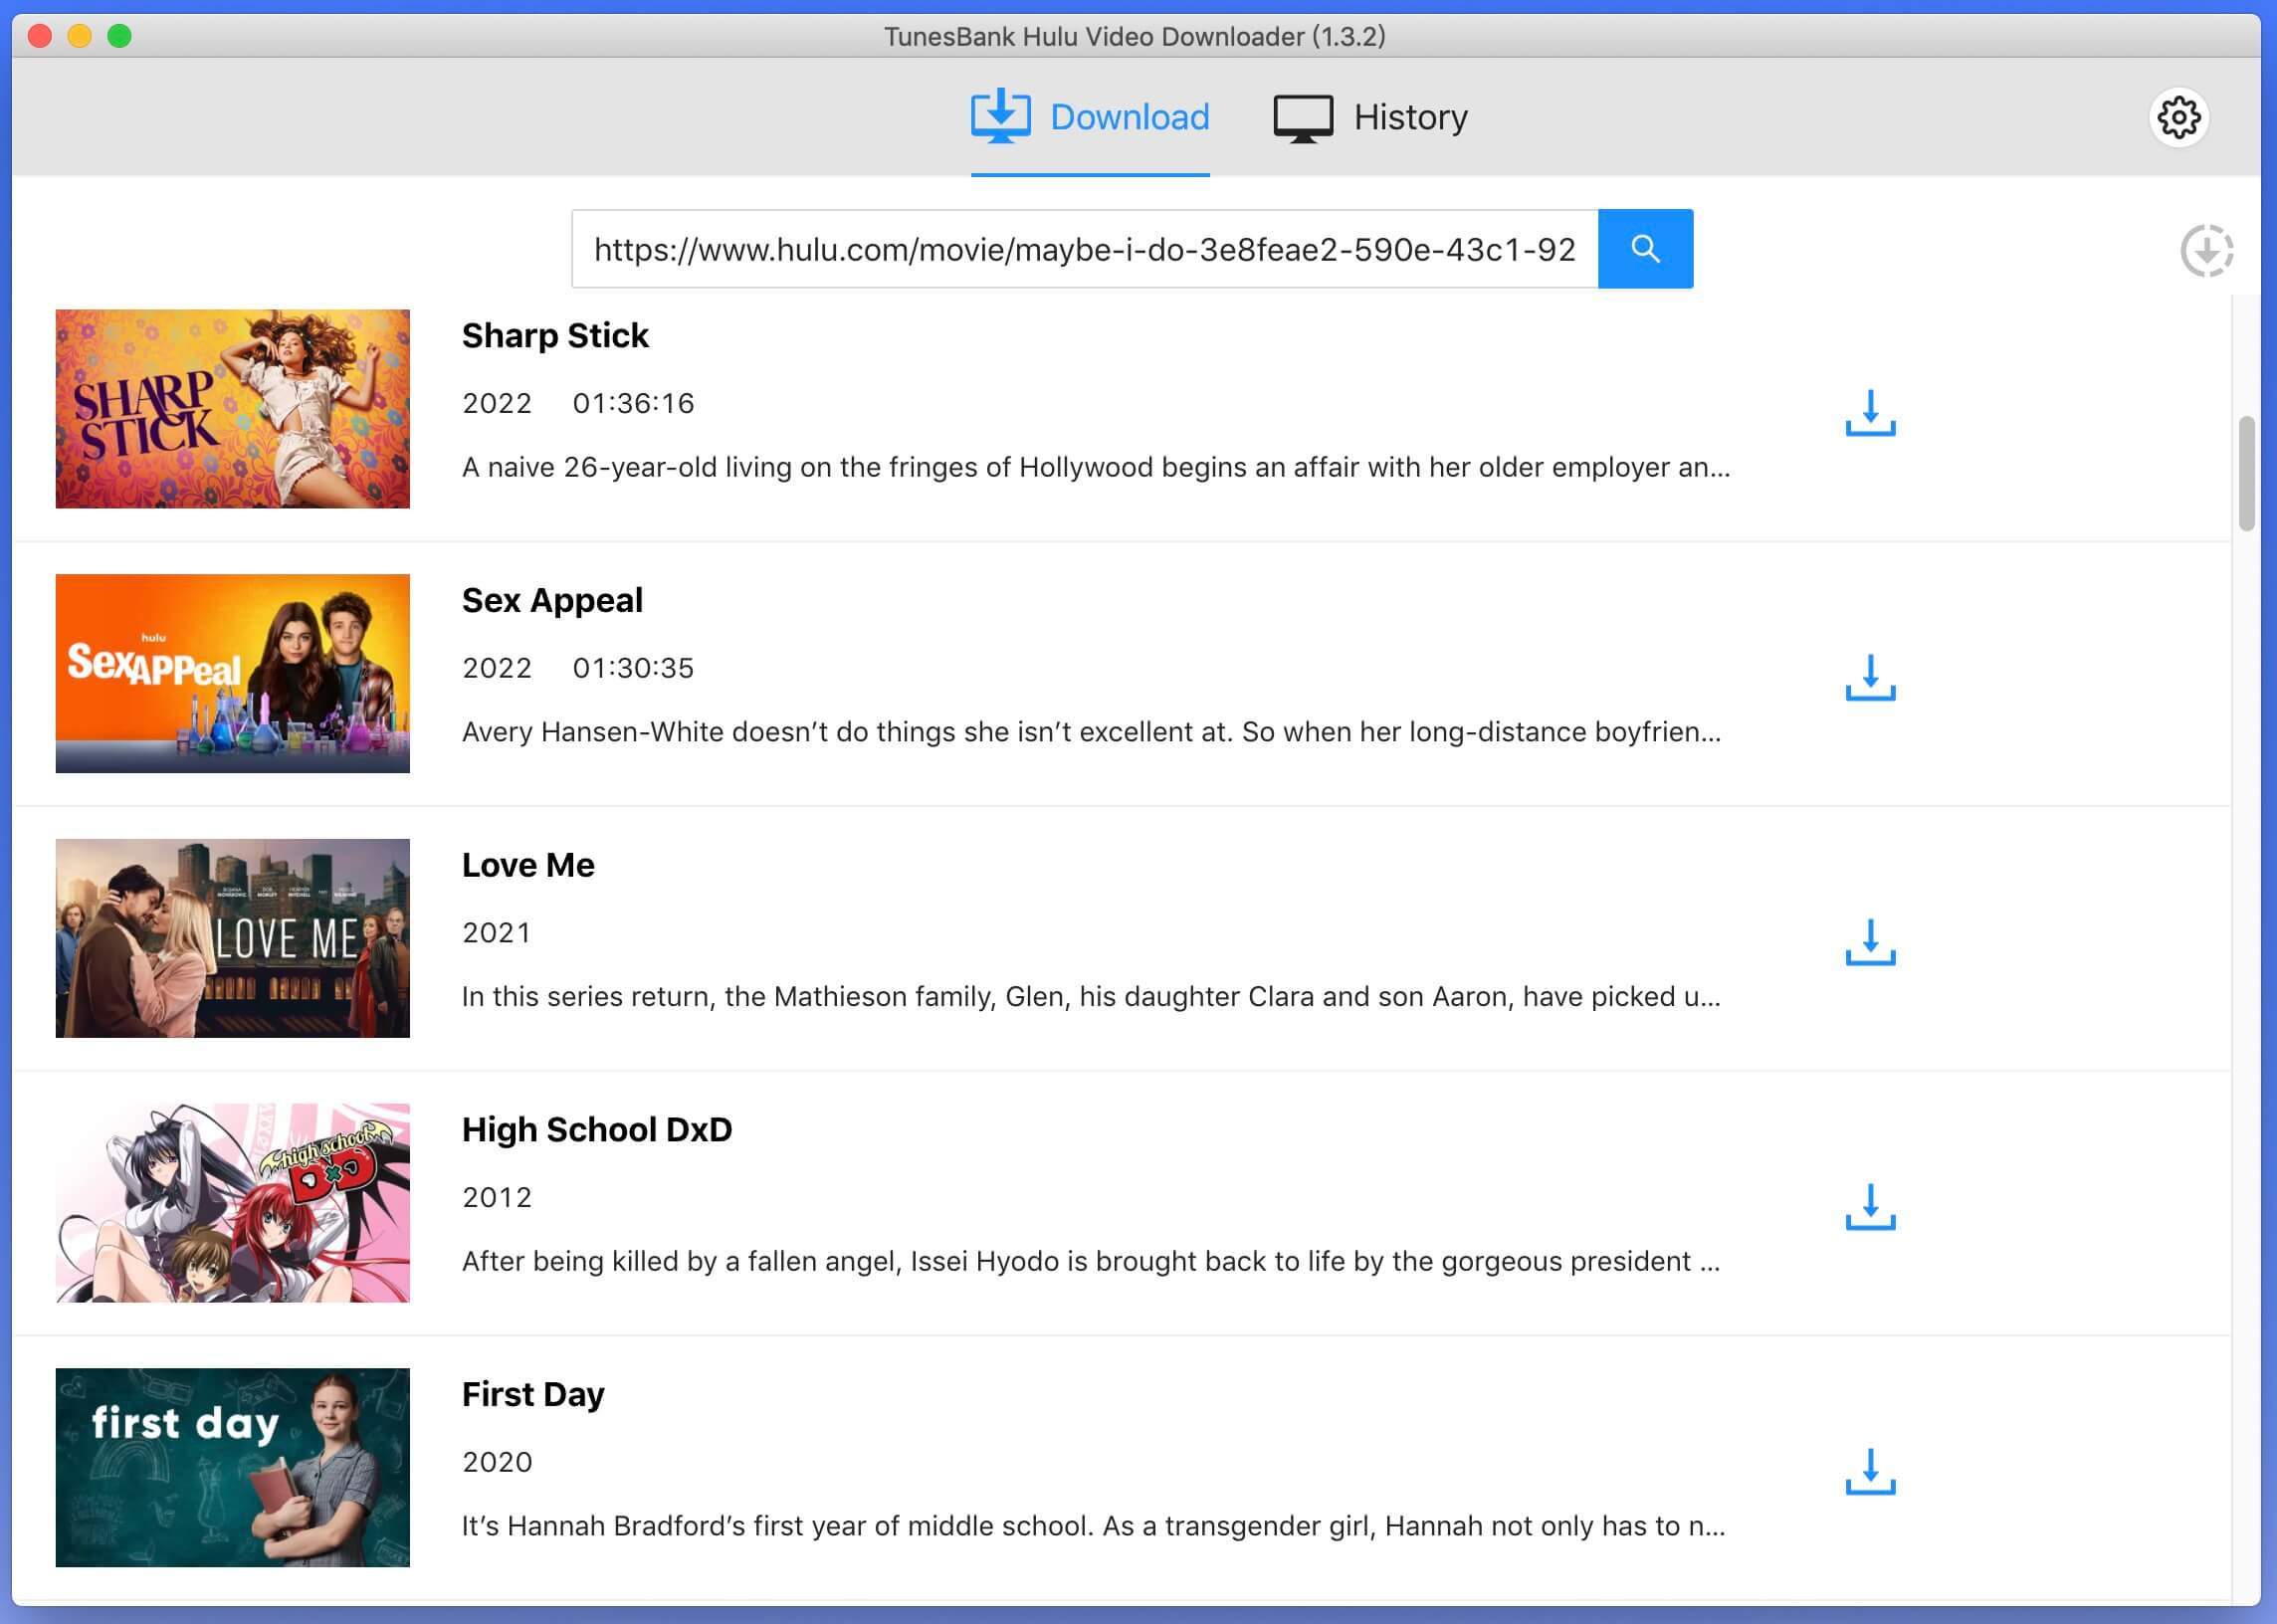 TunesBank Hulu Video Downloader copy and paste Hulu video link